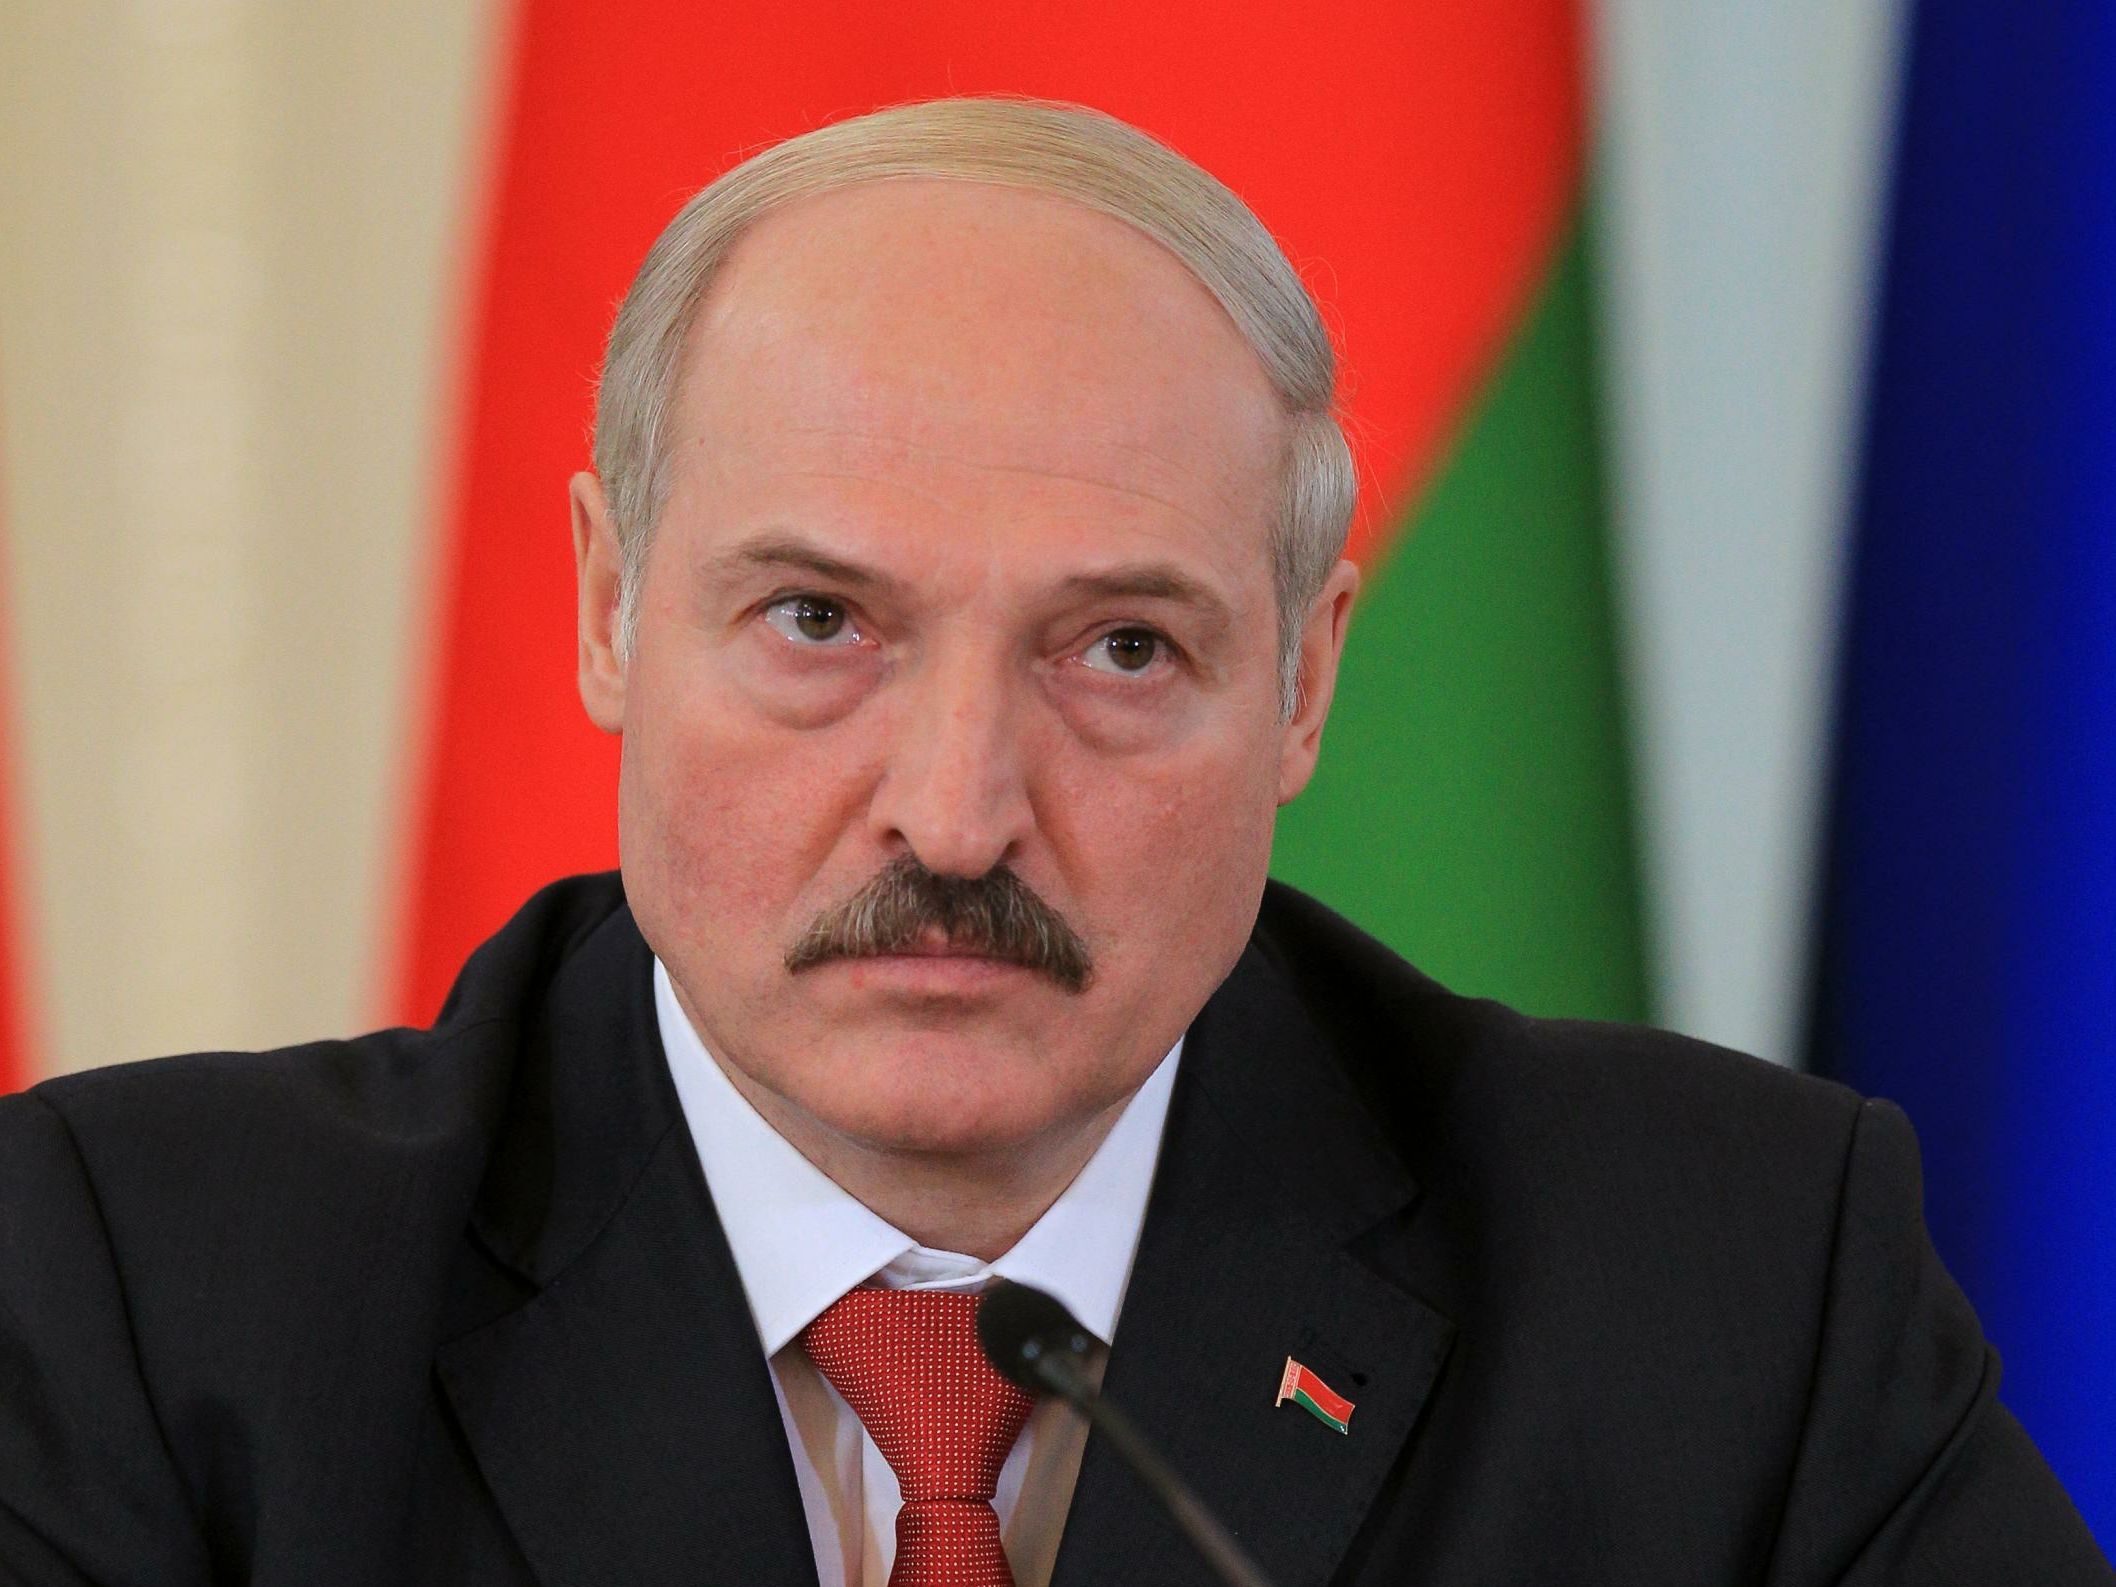 Александр Лукашенко: я заставлю уважать Беларусь, она не является частью "русского мира", забудьте!